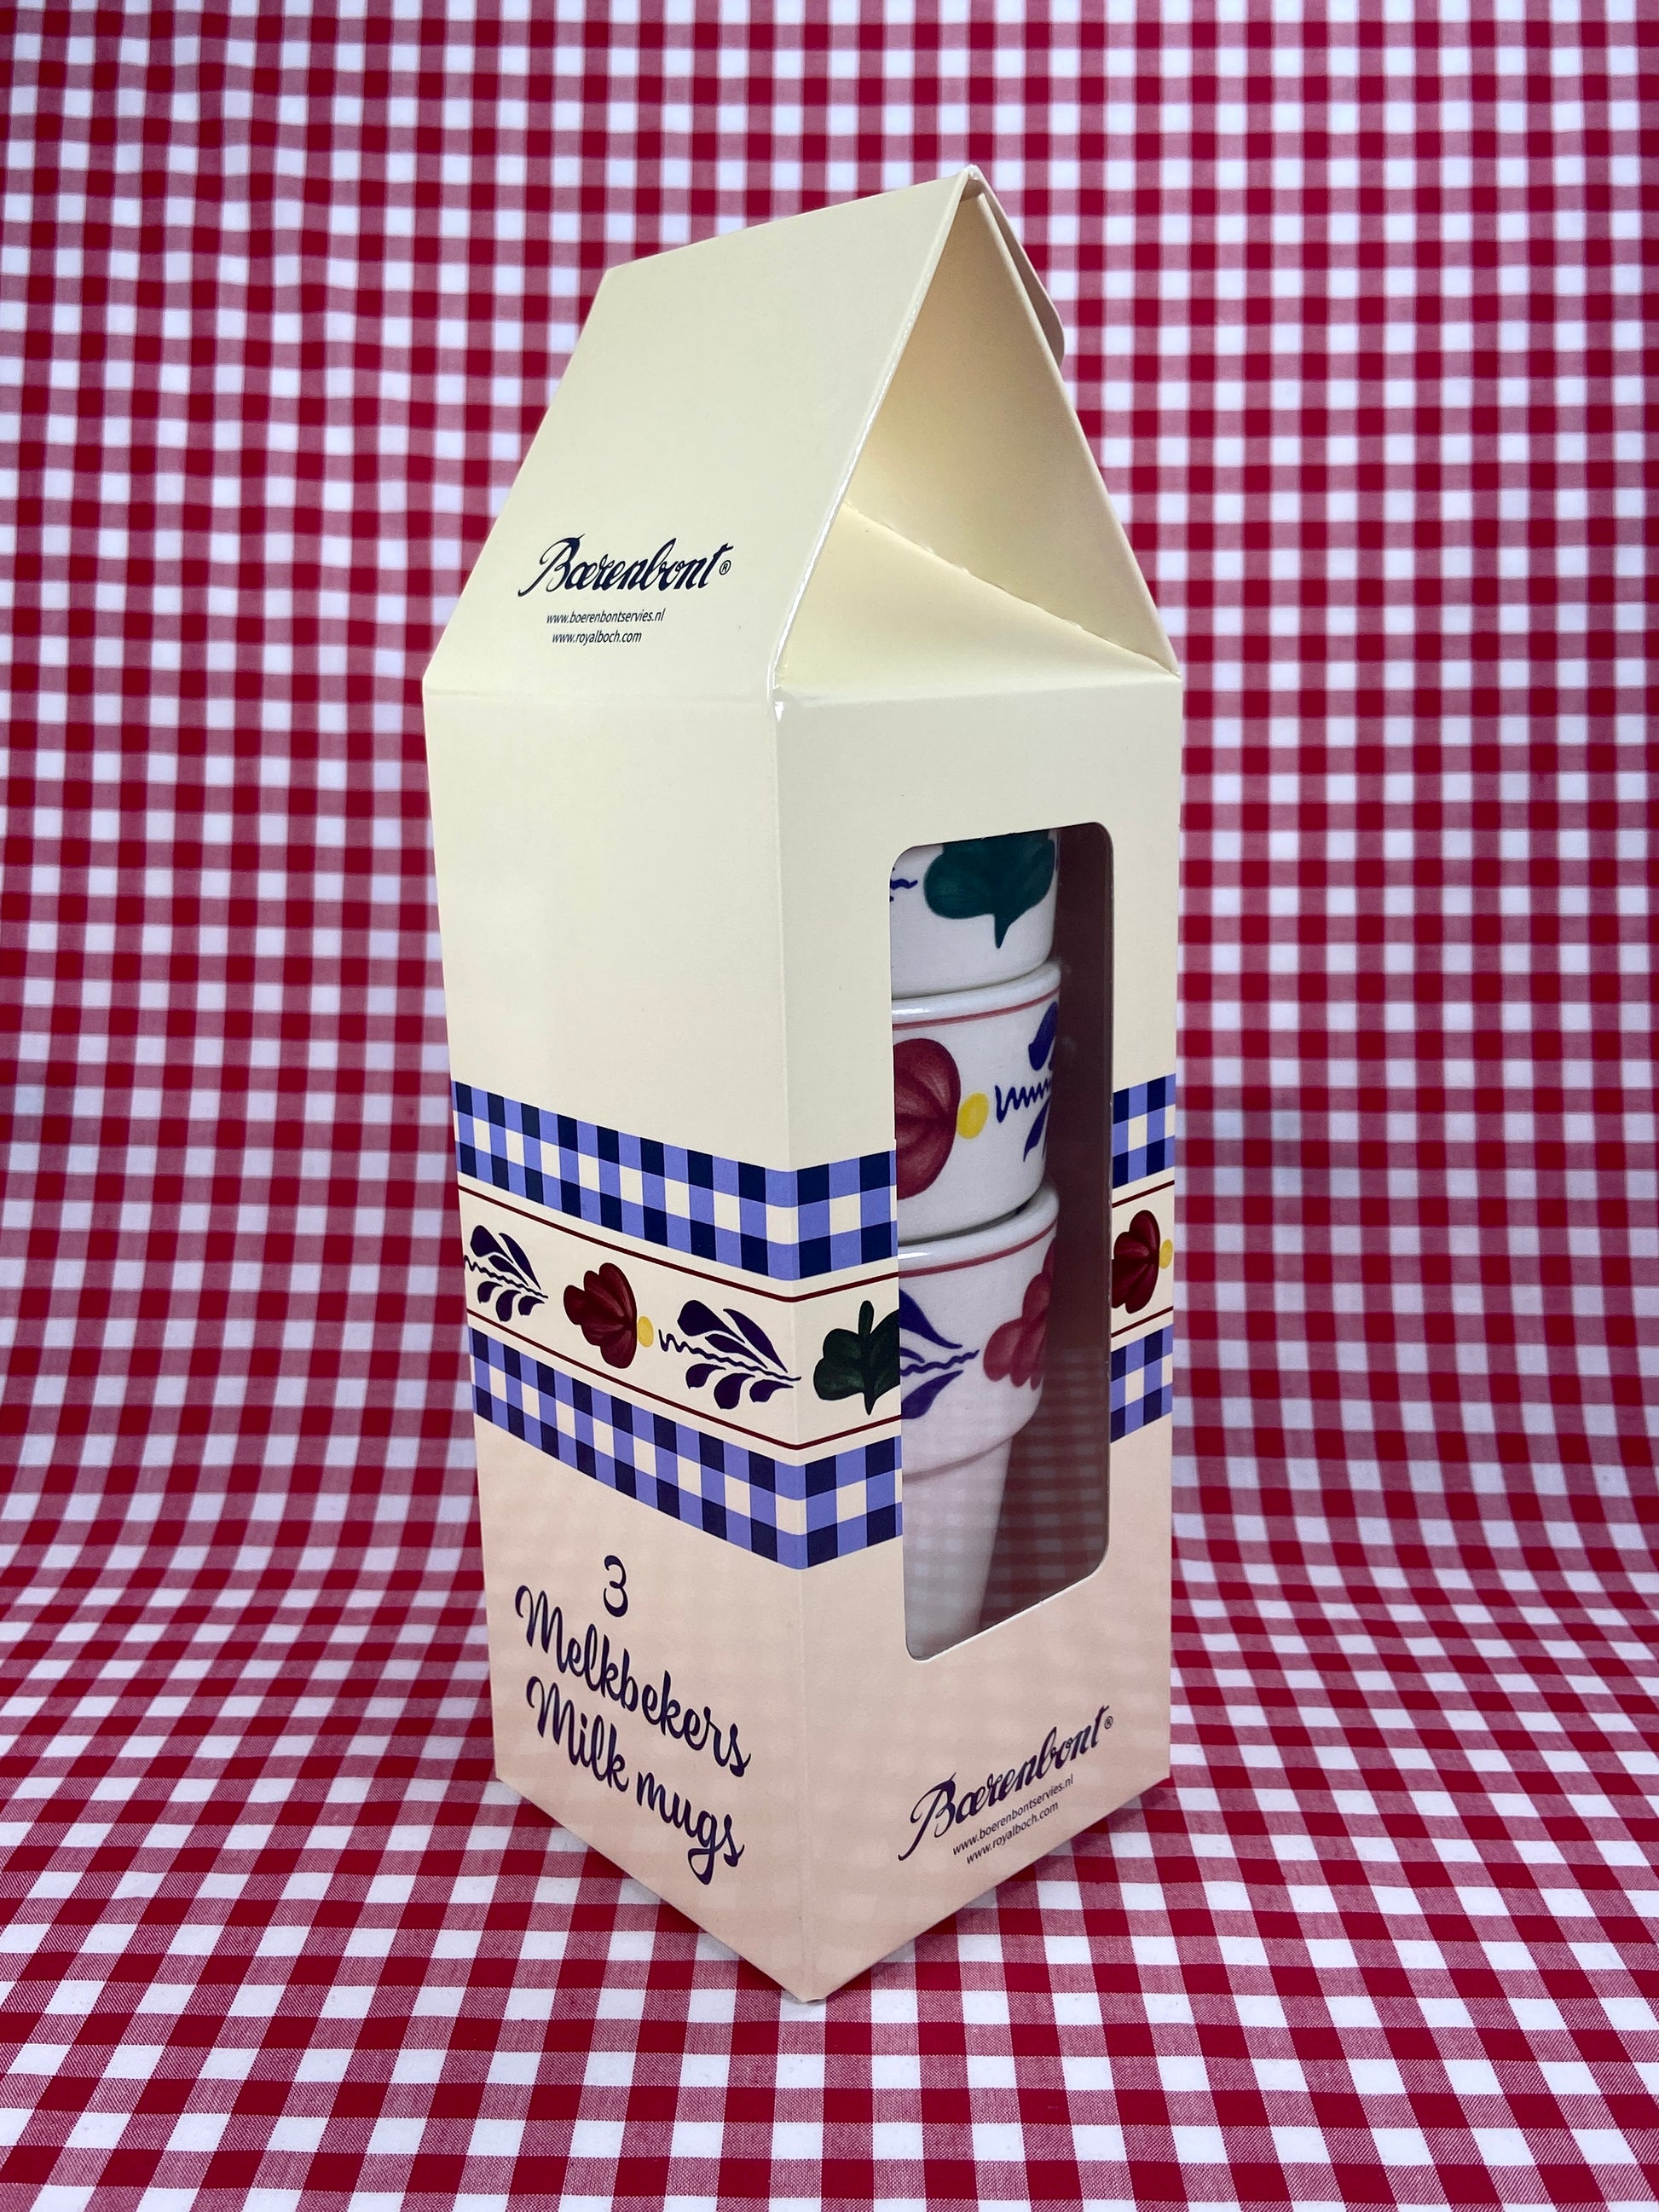 Dutch Boerenbont Giftset with 3 milk mugs - Big Bite Dutch Treats